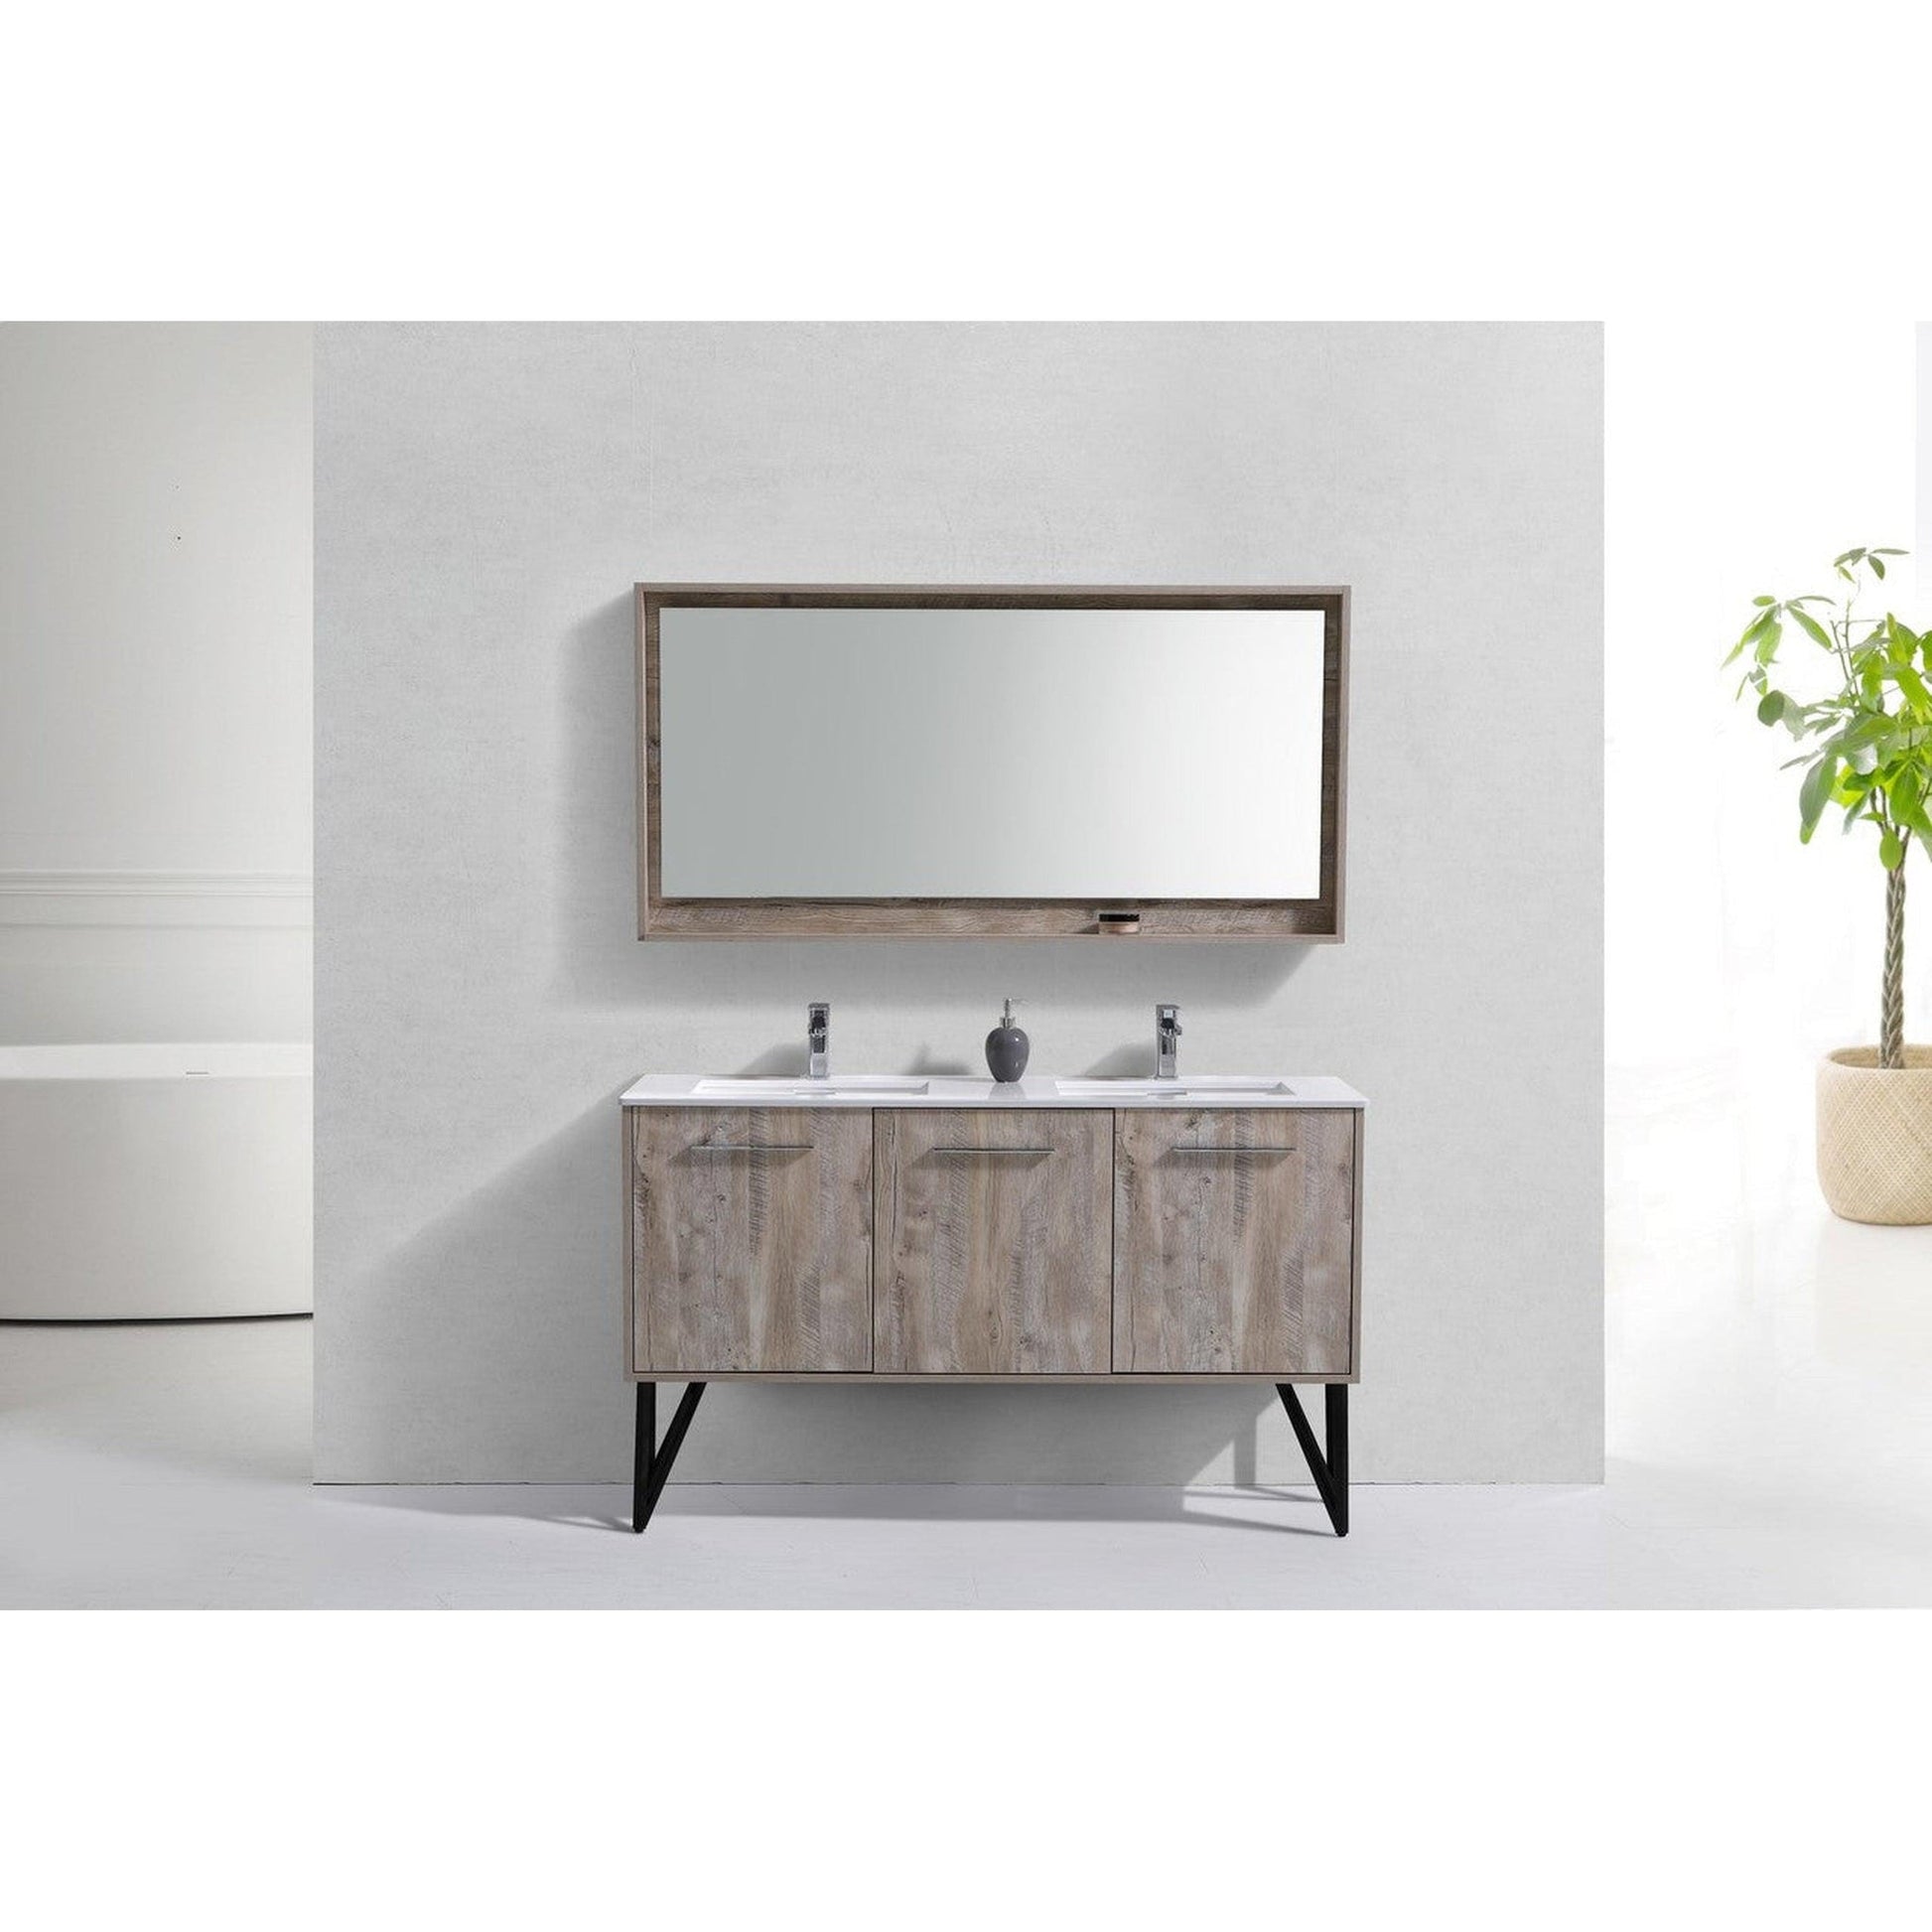 KubeBath Bosco 60" Nature Wood Modern Freestanding Bathroom Vanity With Double Undermount Sink With Overflow